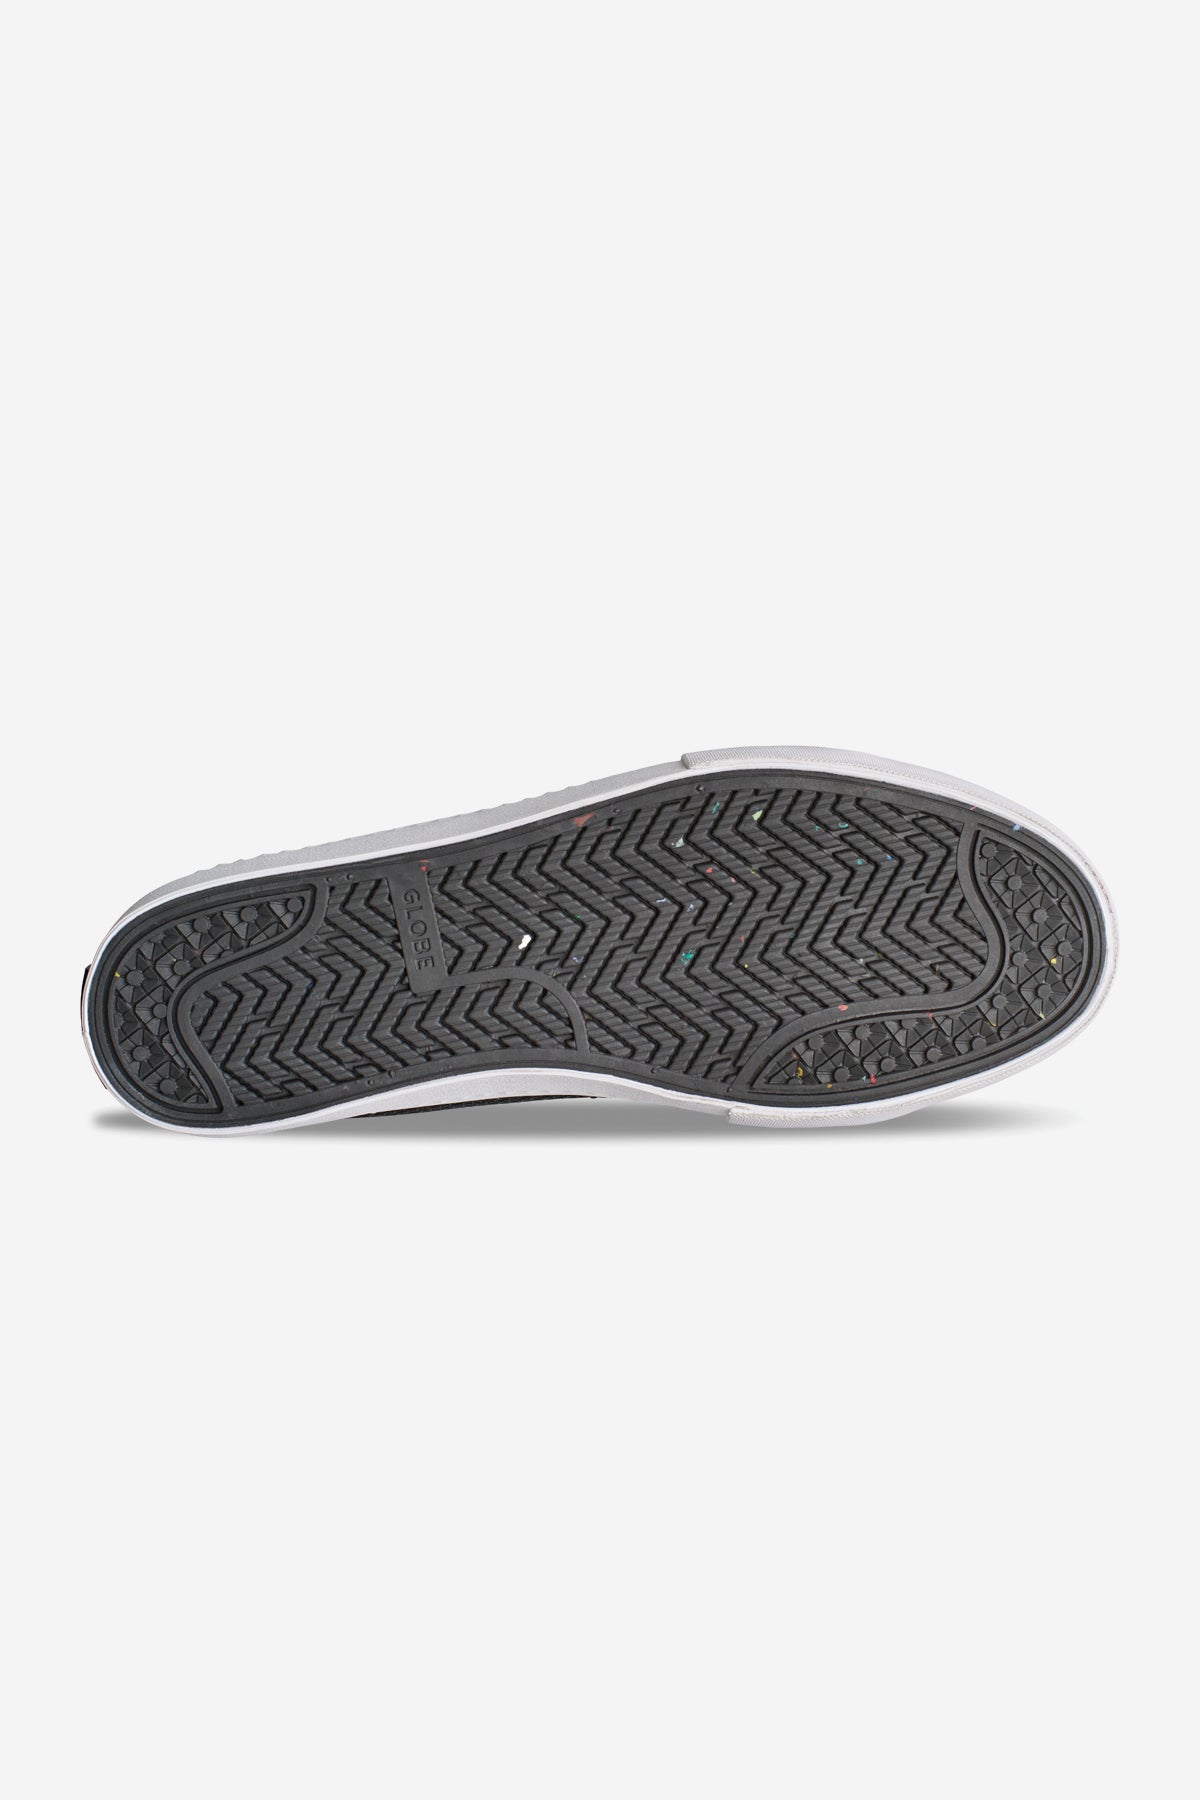 LA-Strick Black/White skateboard Schuhe